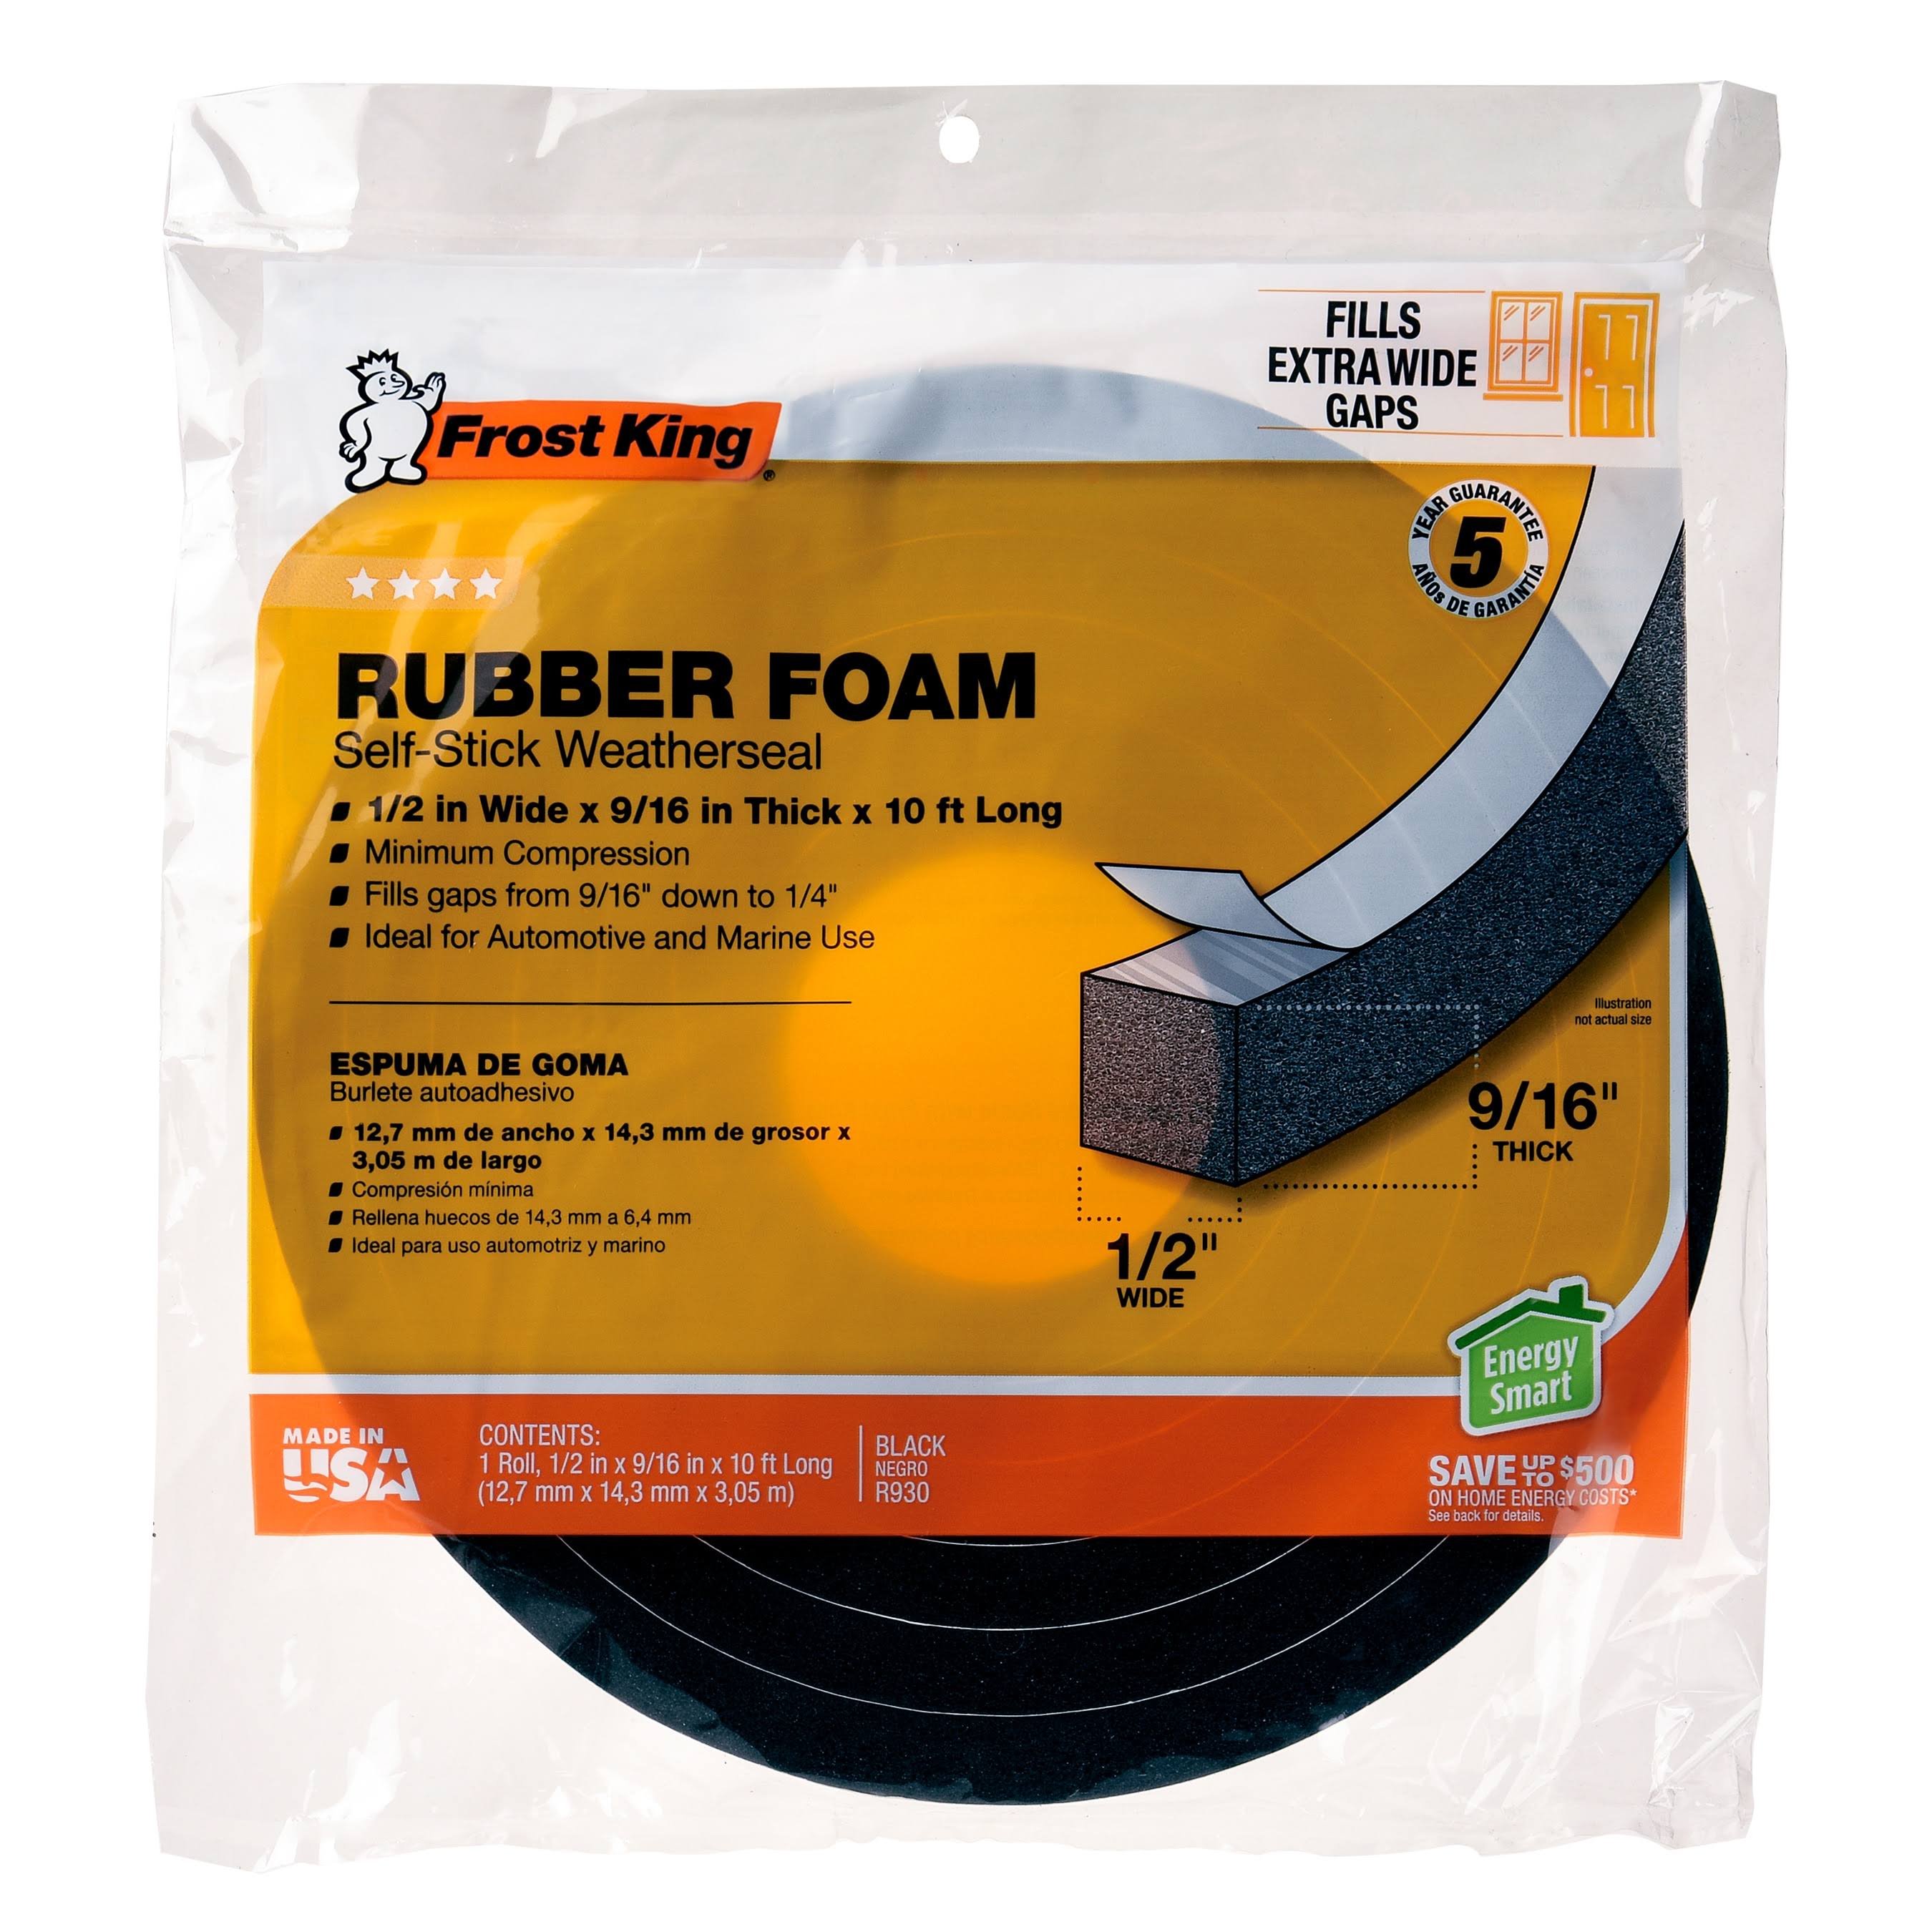 Thermwell Rubber Foam Weatherseal Tape - Black